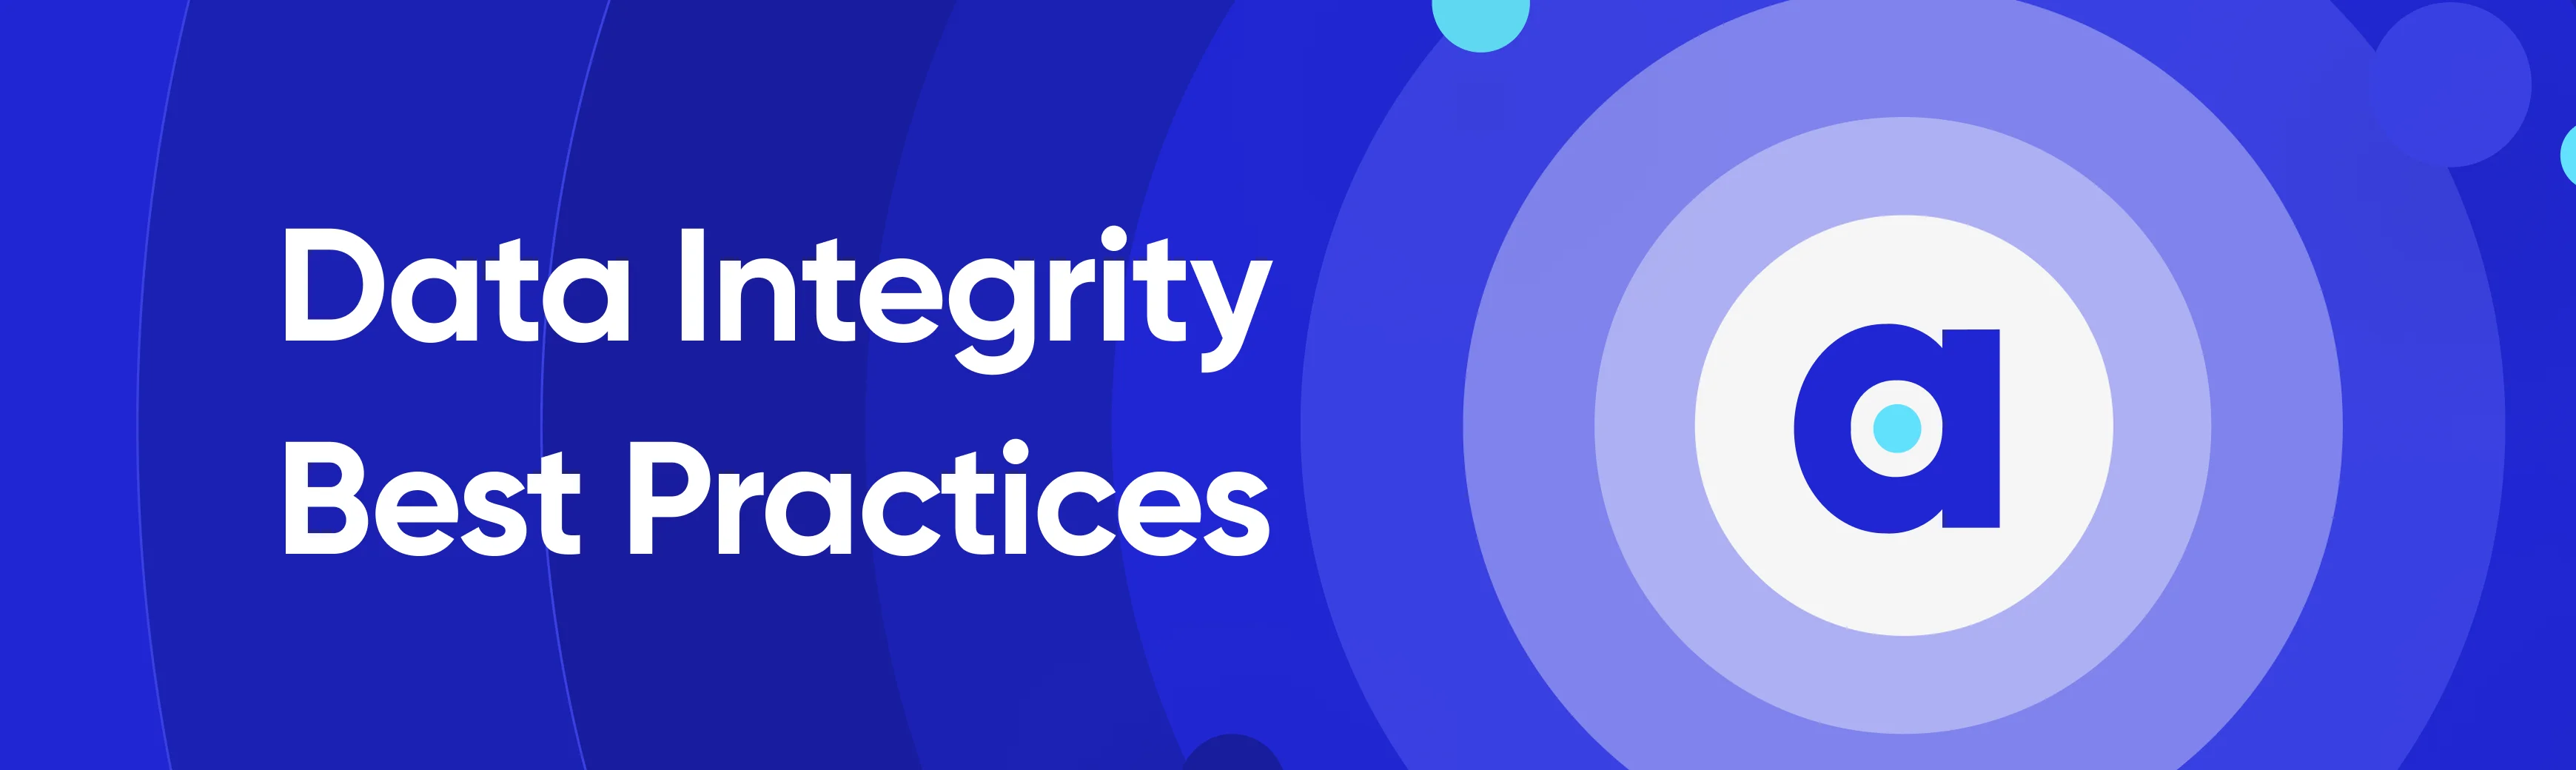 Data integrity best practices